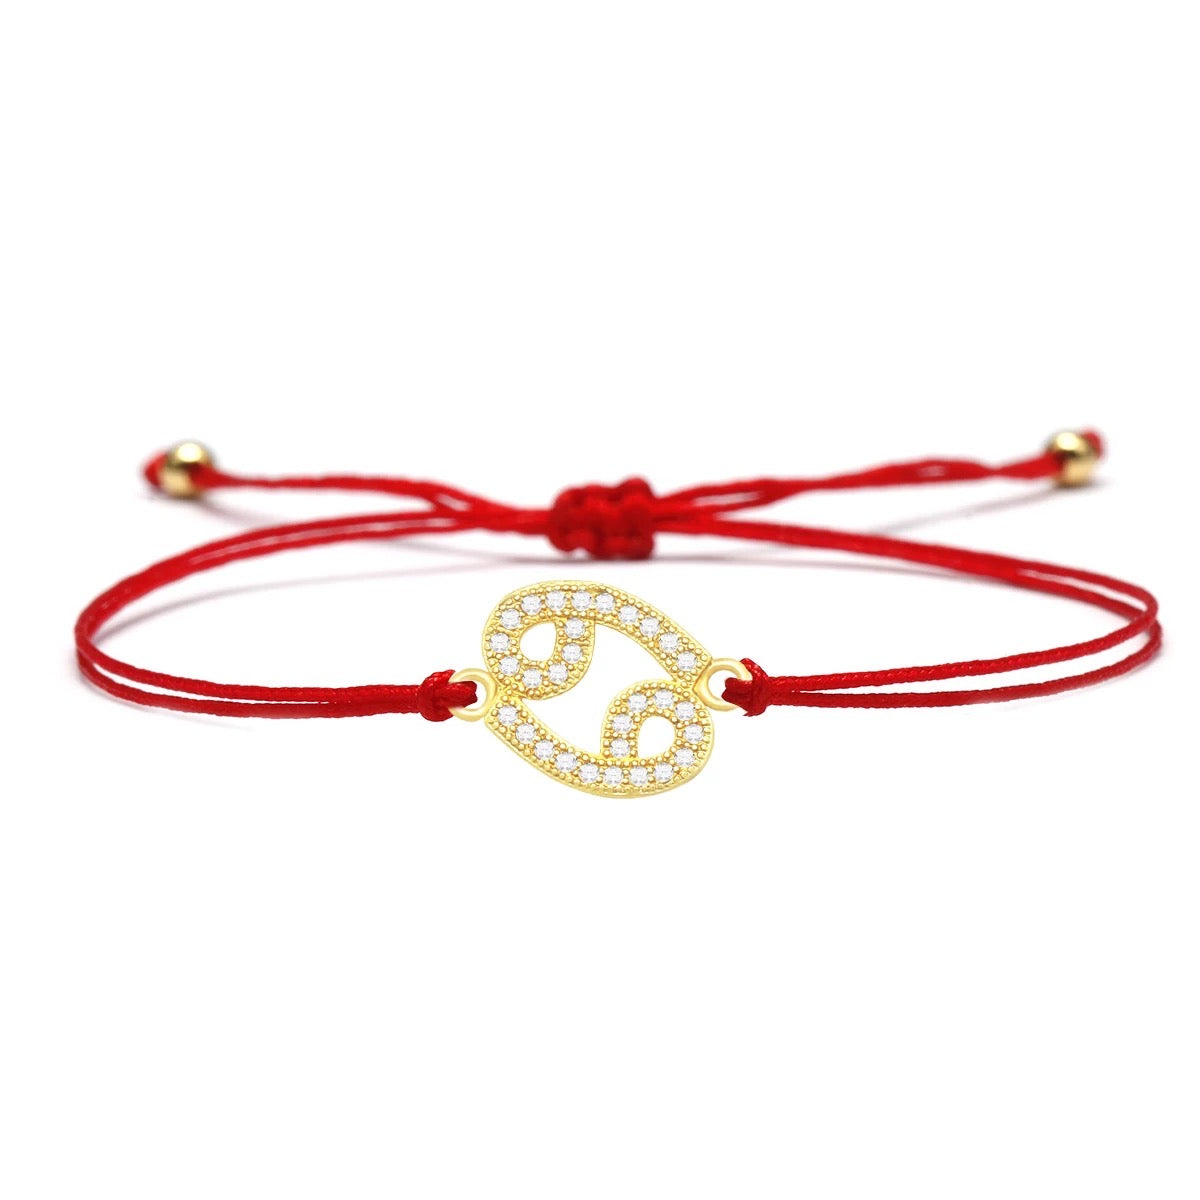 Cancer Zodiac Red String Protection Bracelet - MY HARMONY TREE